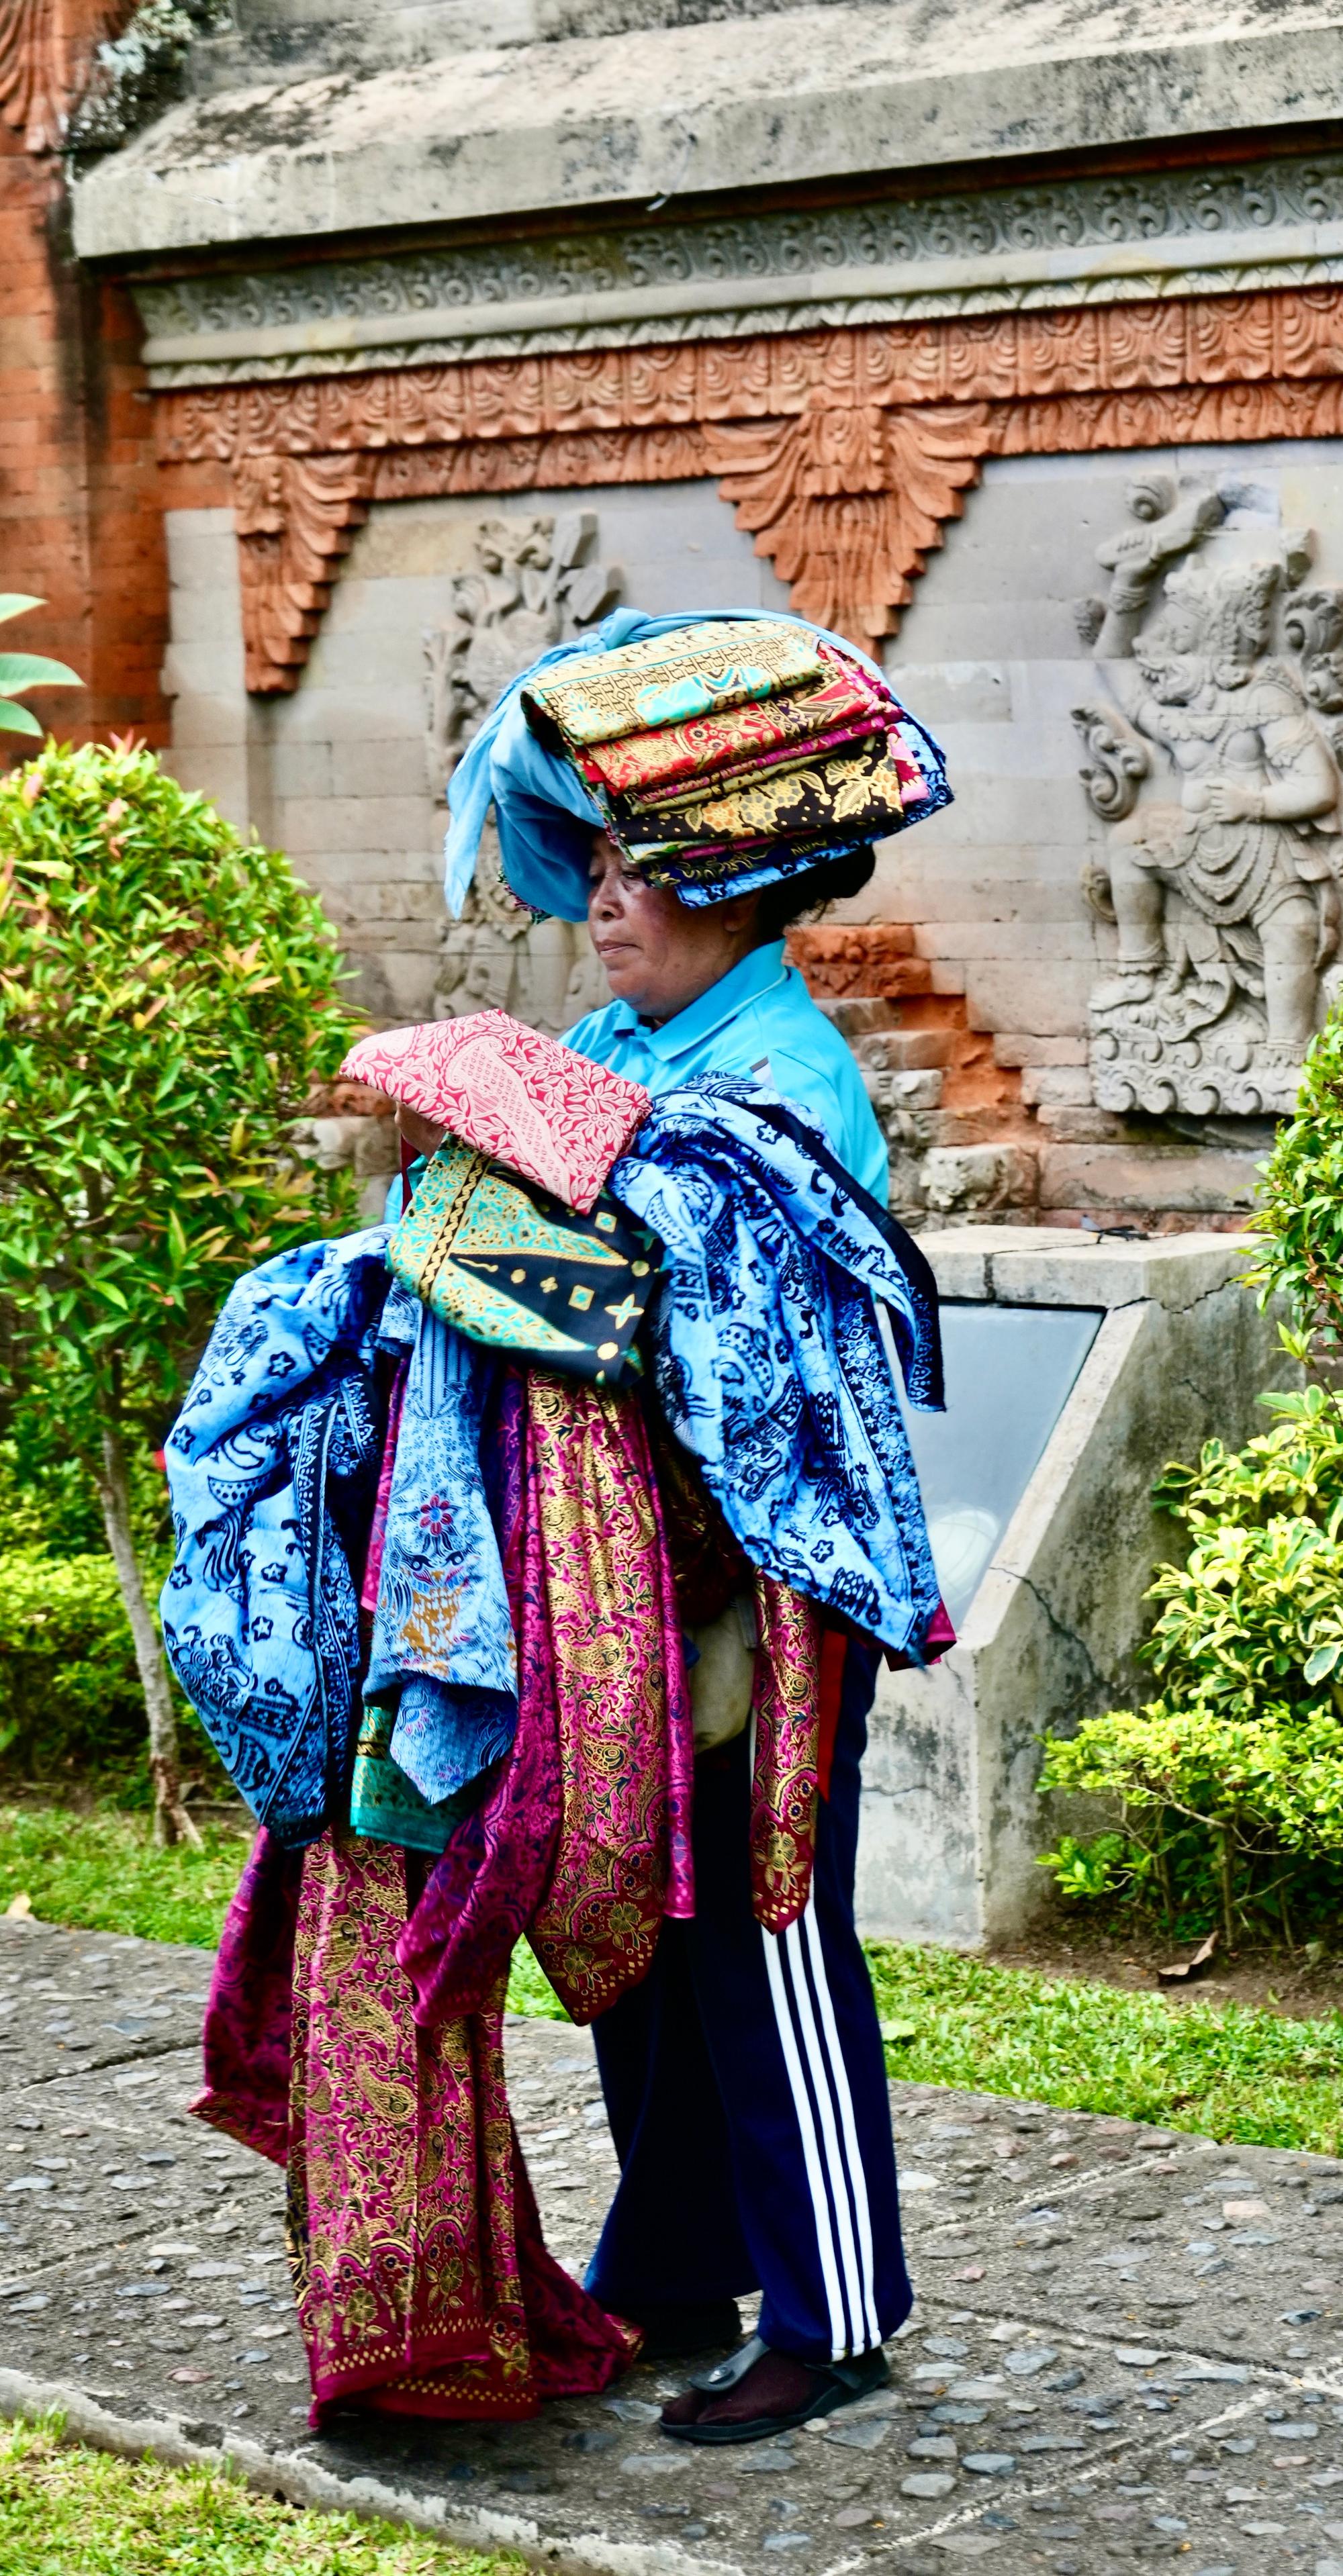 Cloth seller